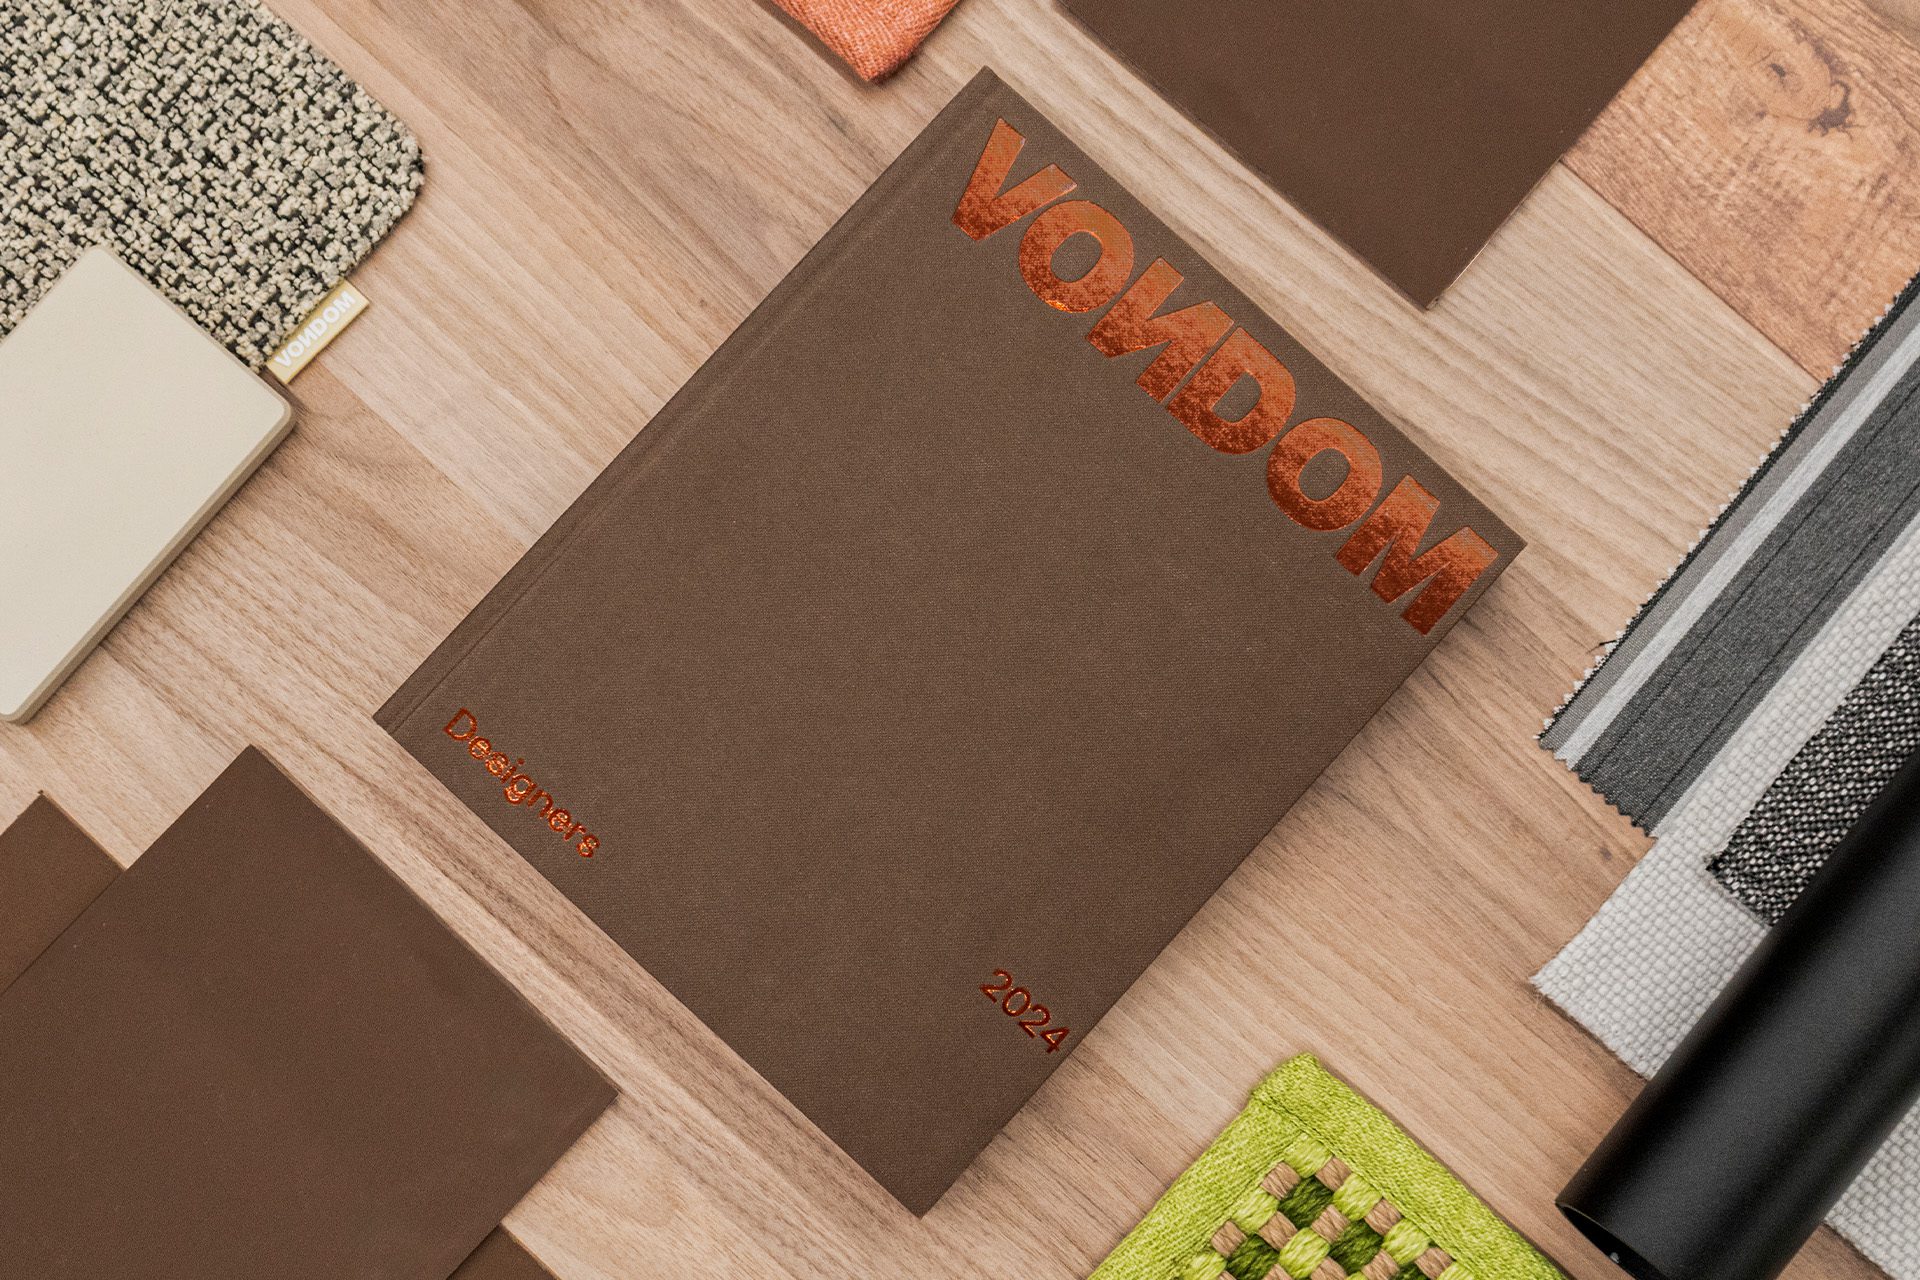 Nuevo catálogo de muebles de Vondom